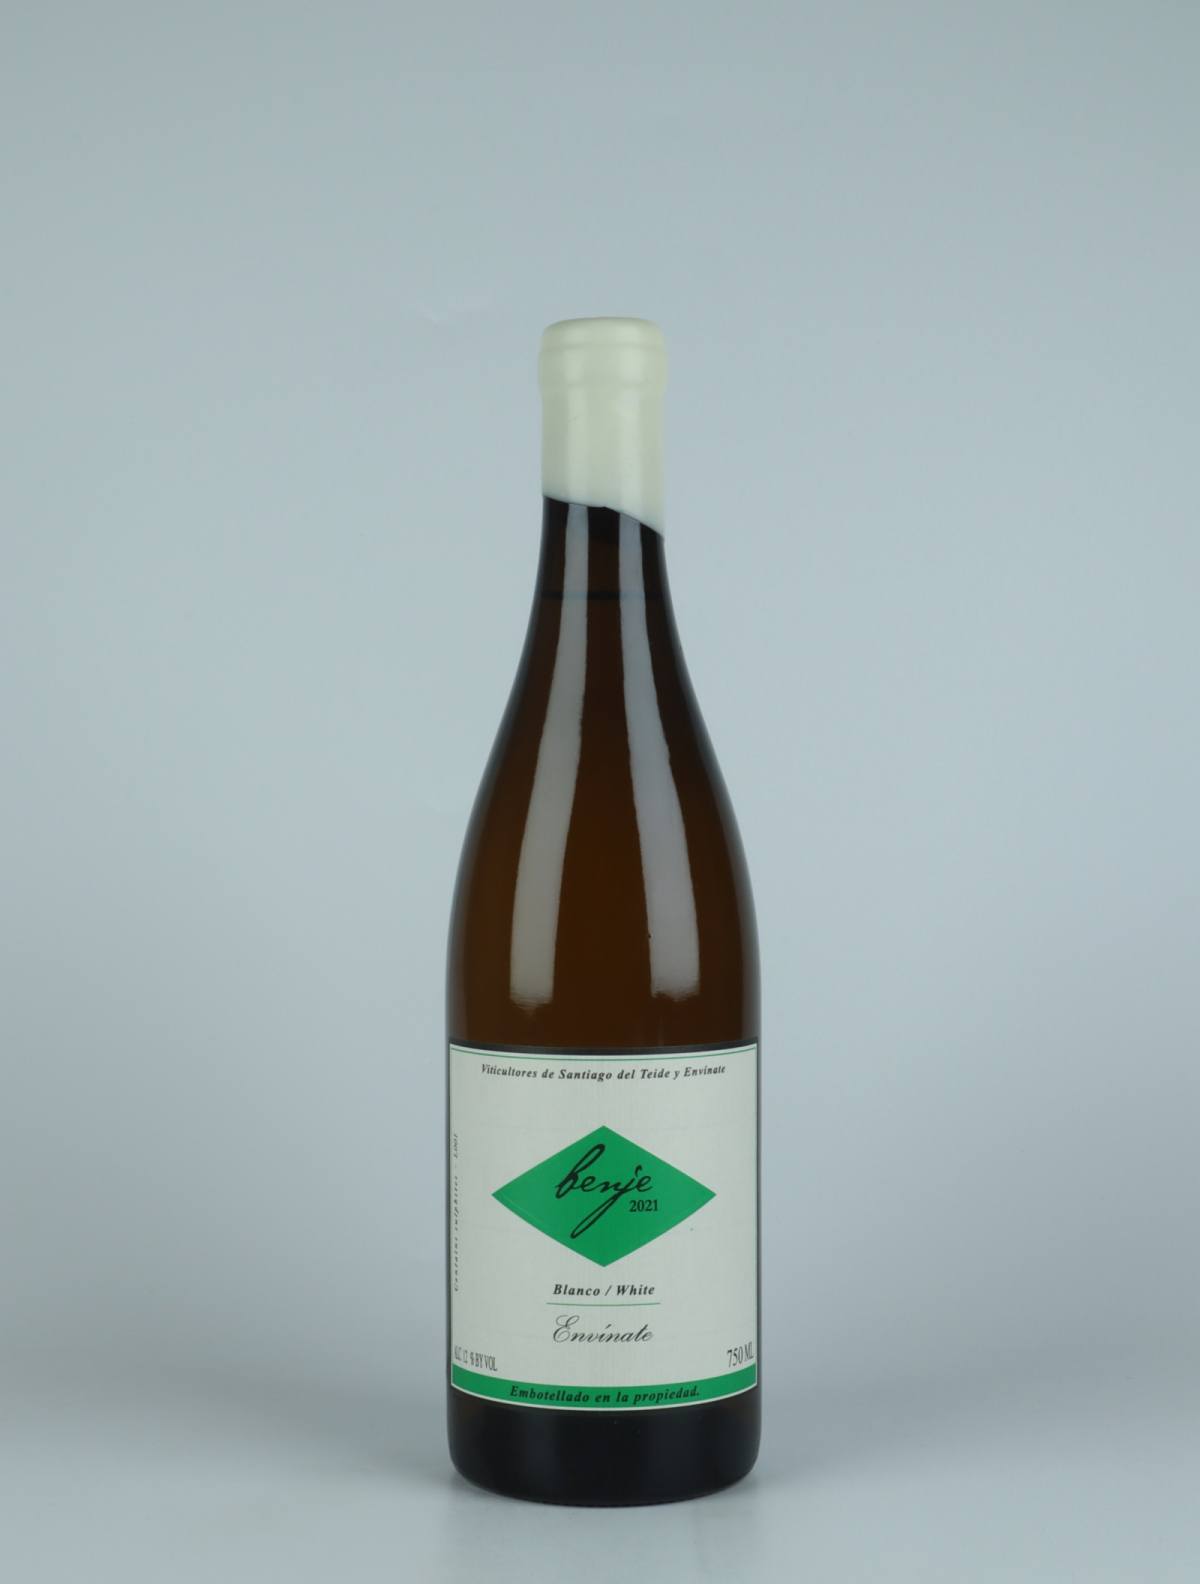 A bottle 2021 Benje Blanco - Tenerife White wine from Envínate,  in Spain